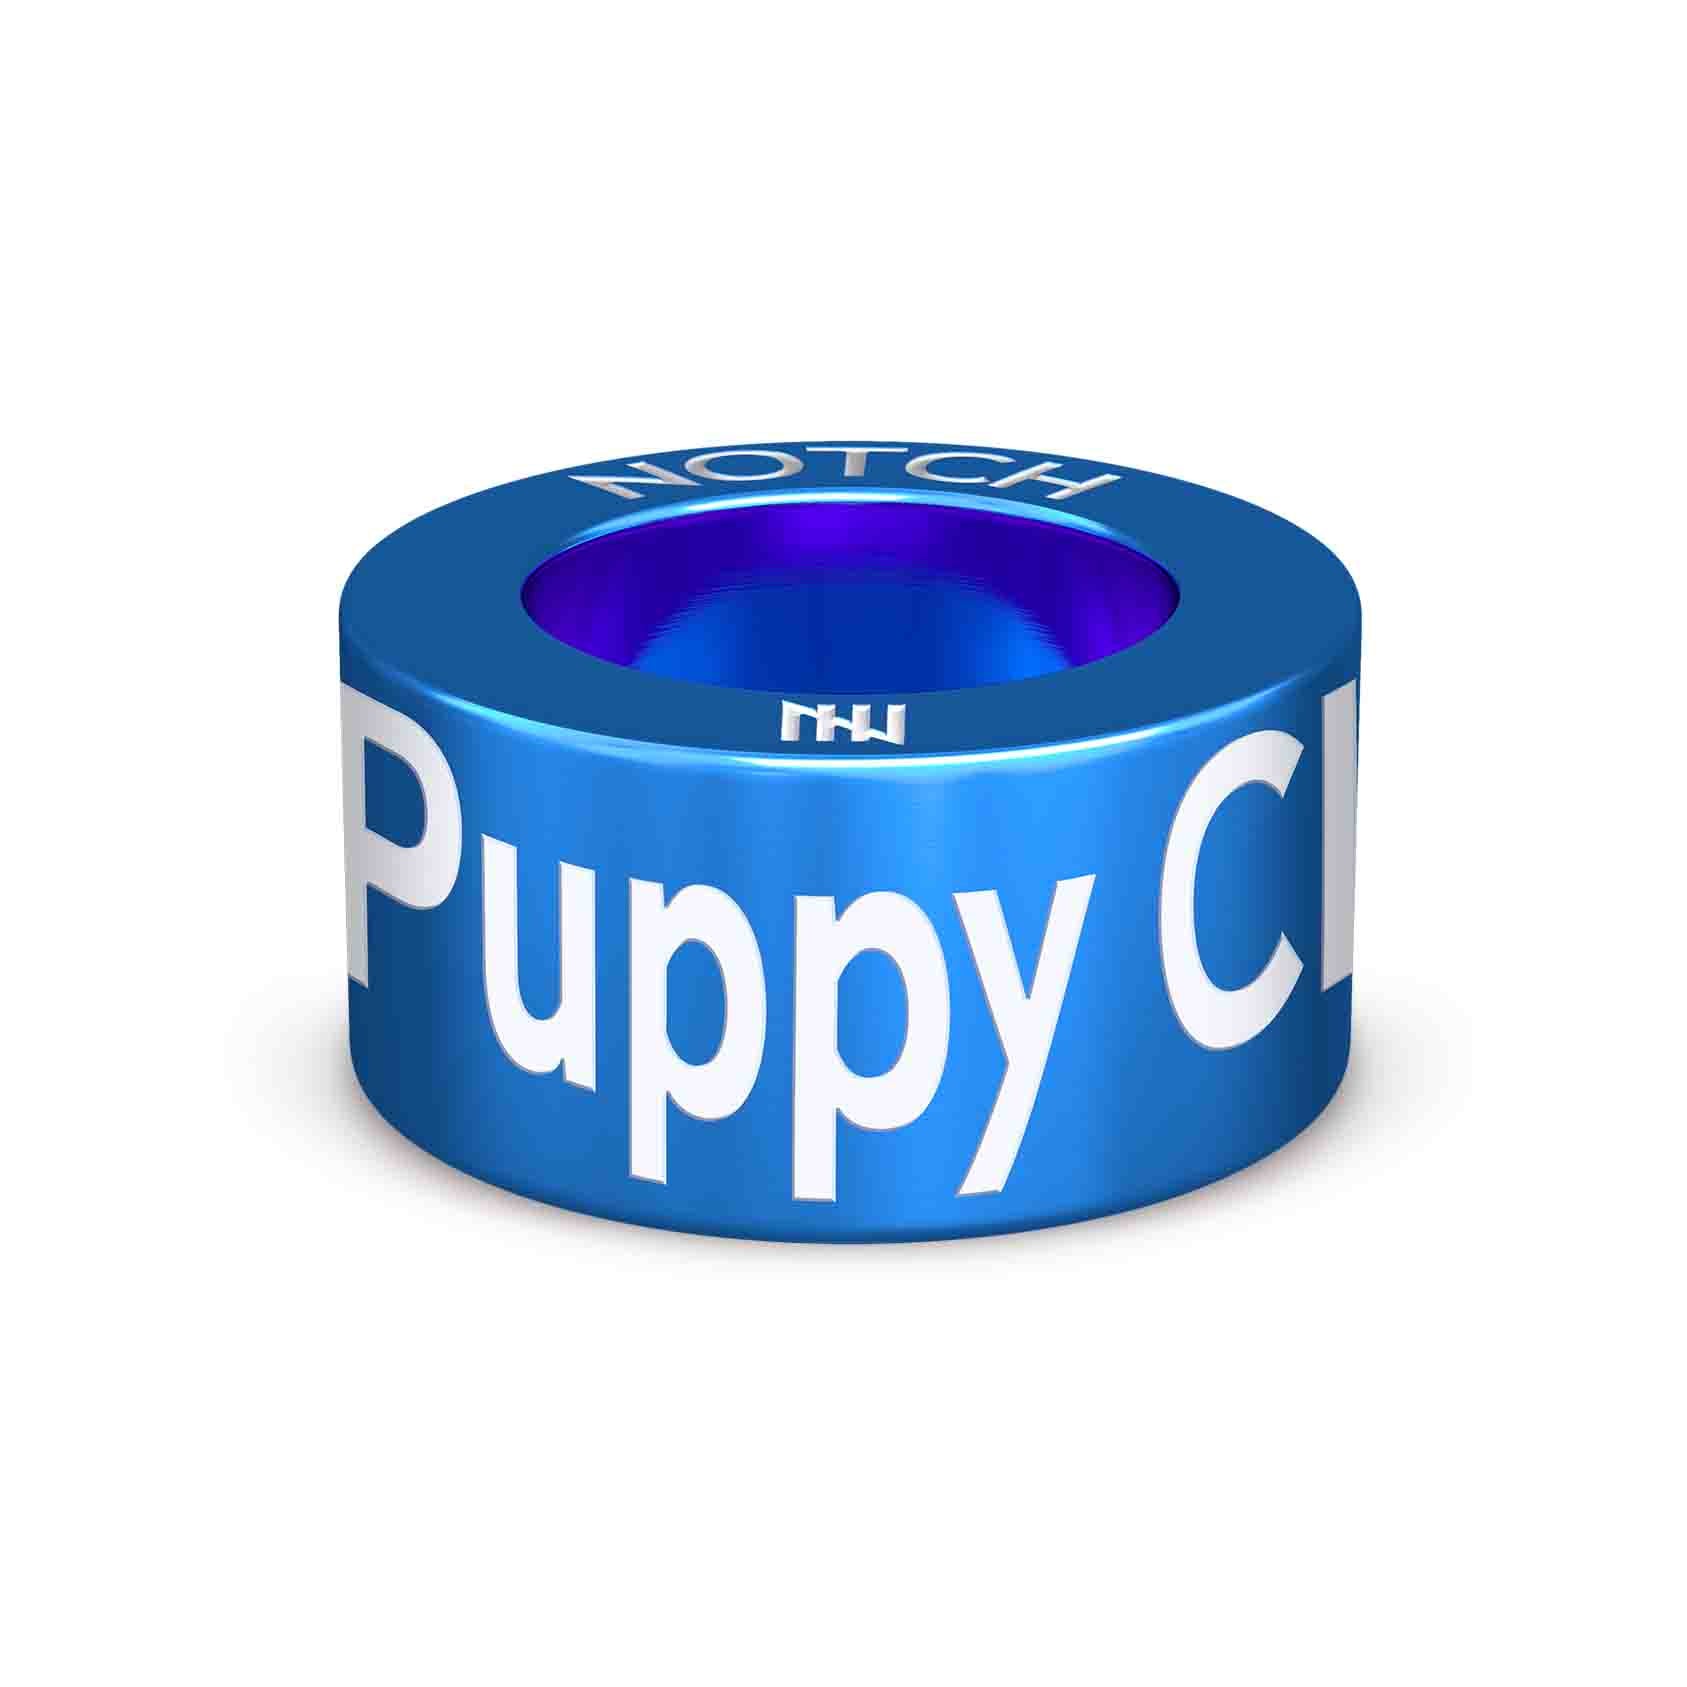 Puppy Class NOTCH Charm